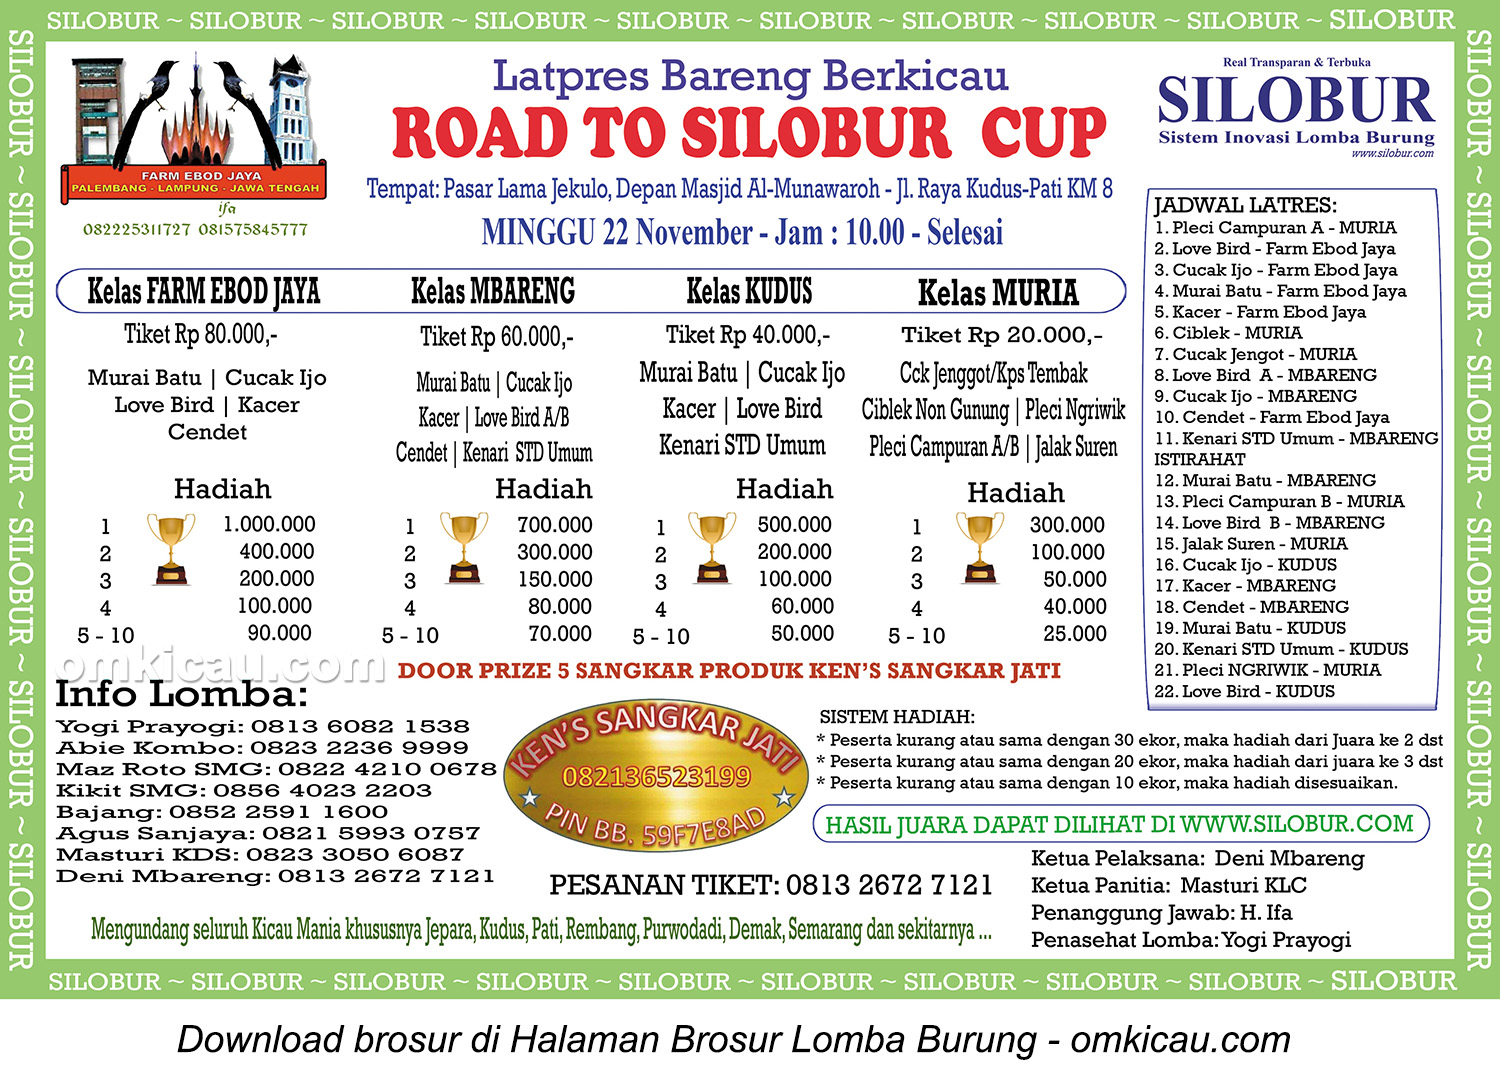 Brosur Latpres Bareng Road to Silobur Cup, Kudus, Minggu 22 November 2015